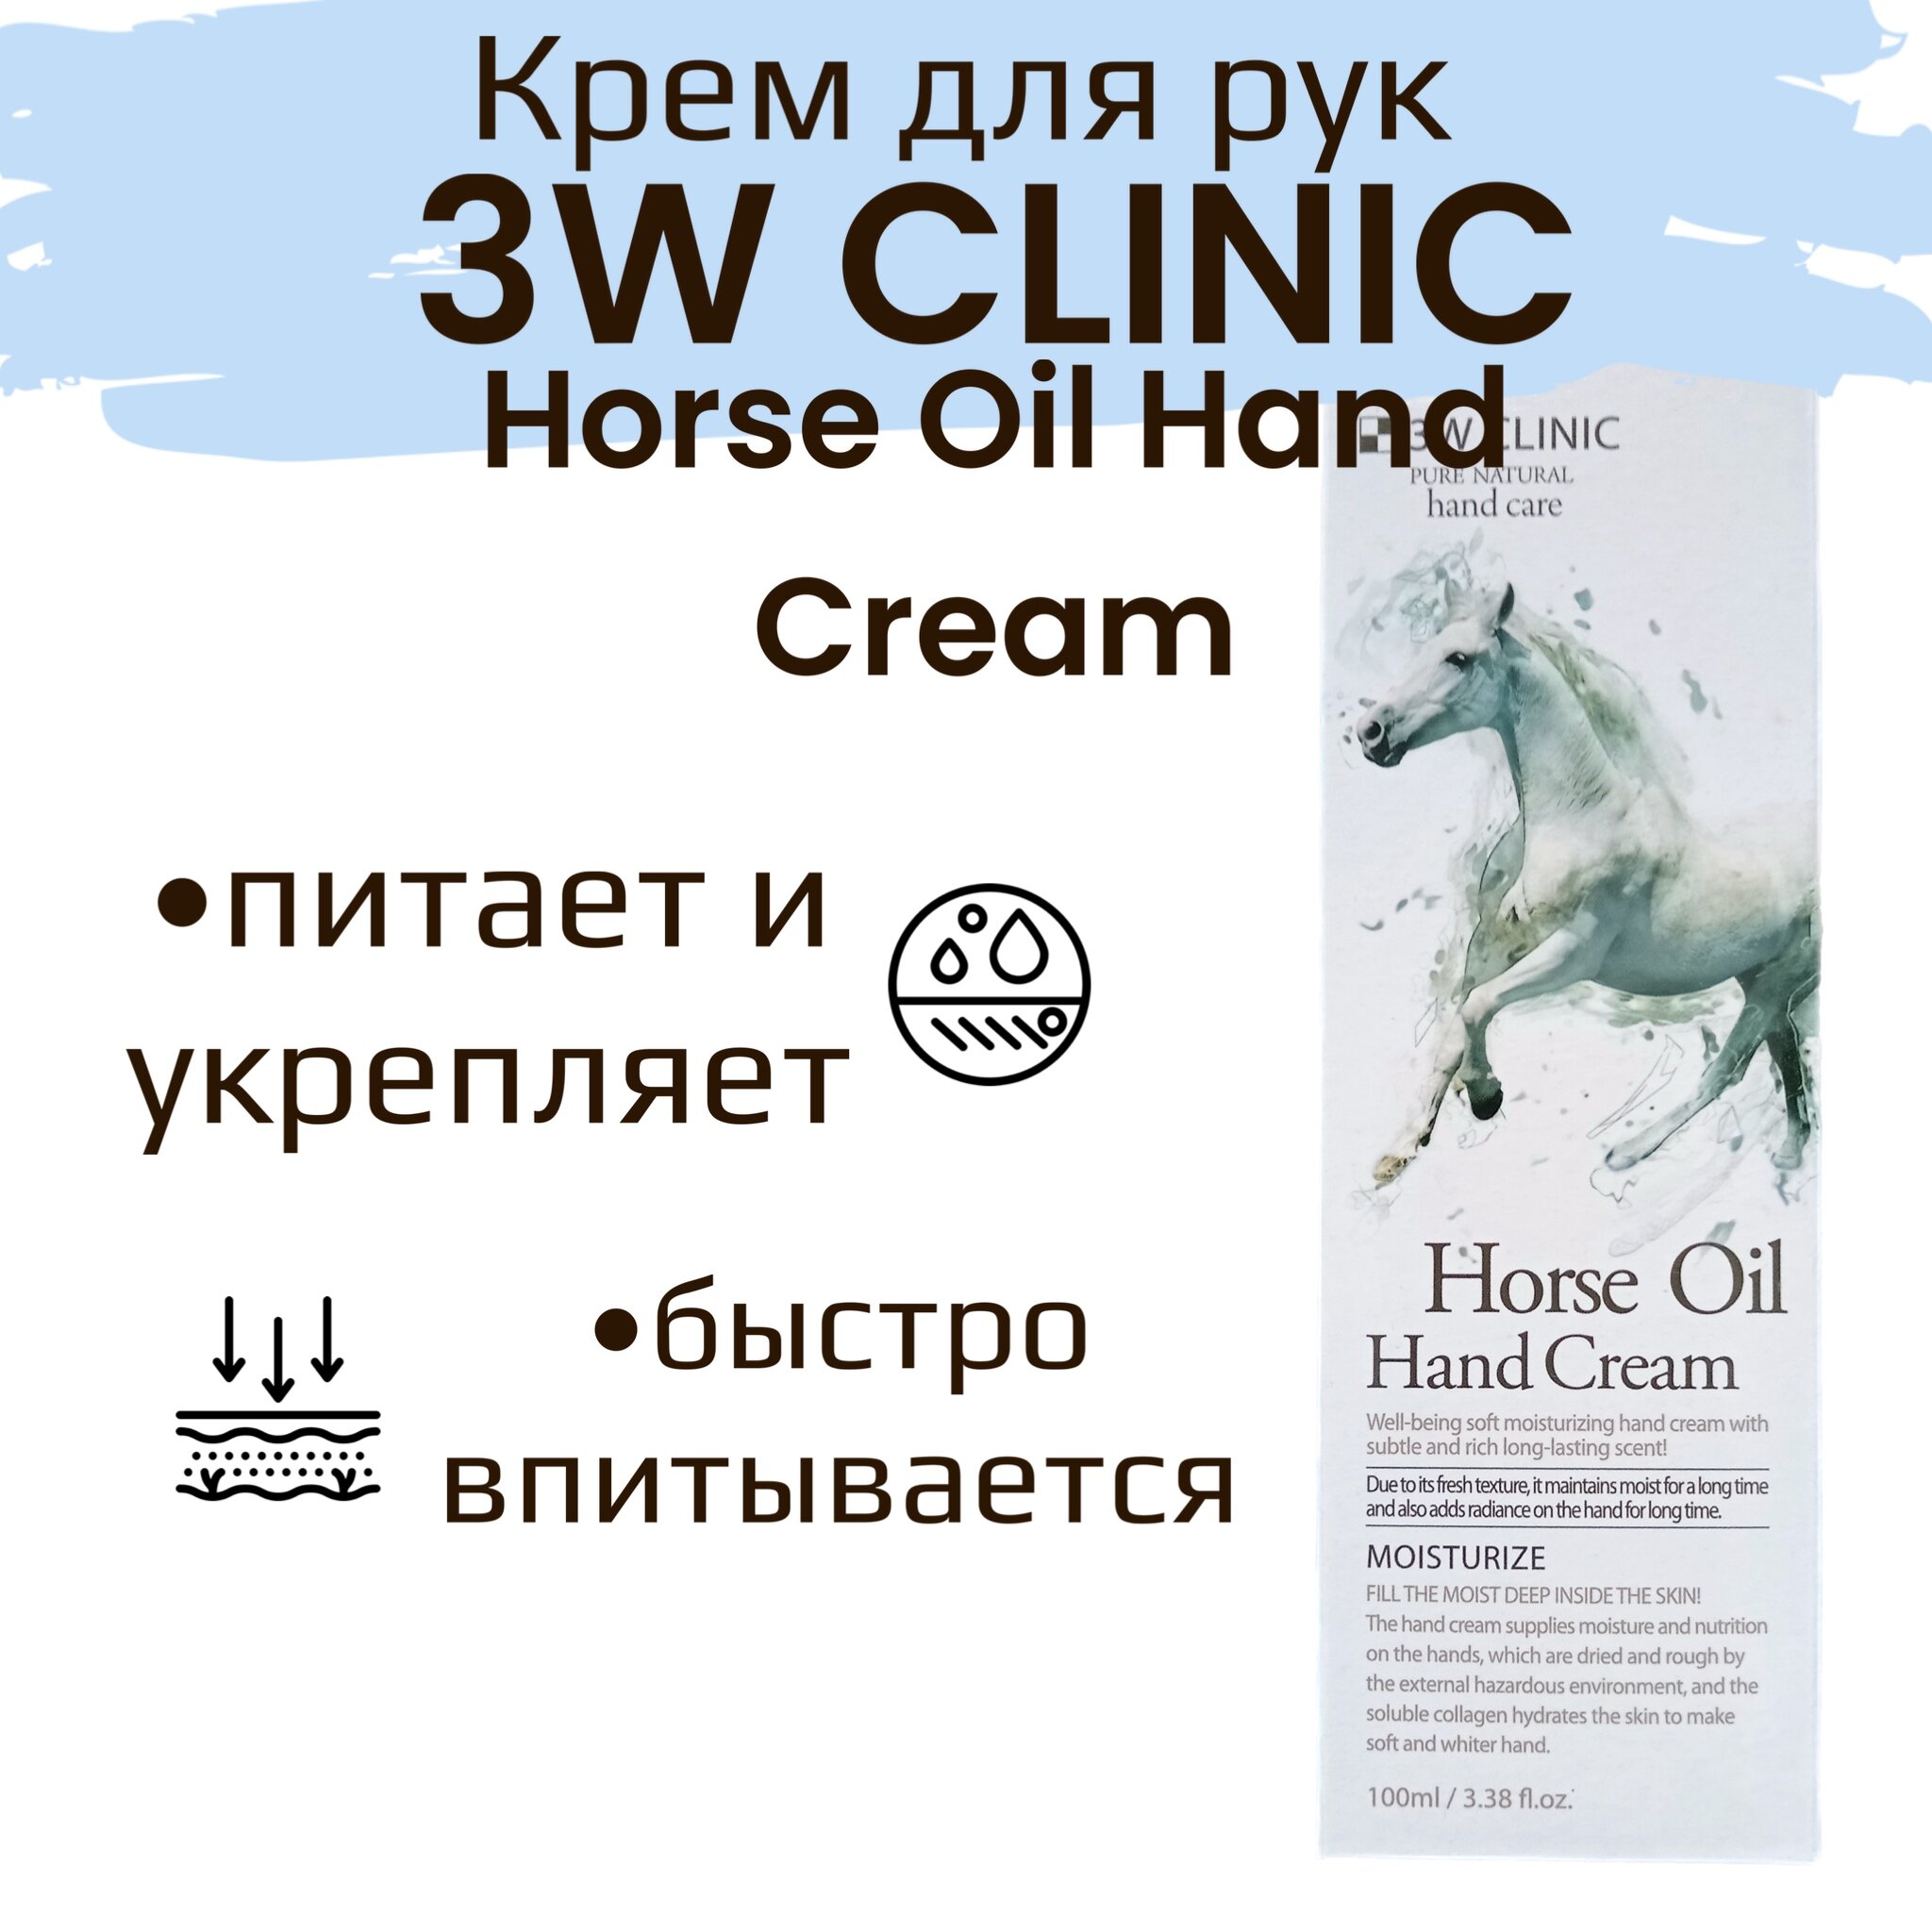 3W Clinic Крем для рук Horse Oil, 100 мл